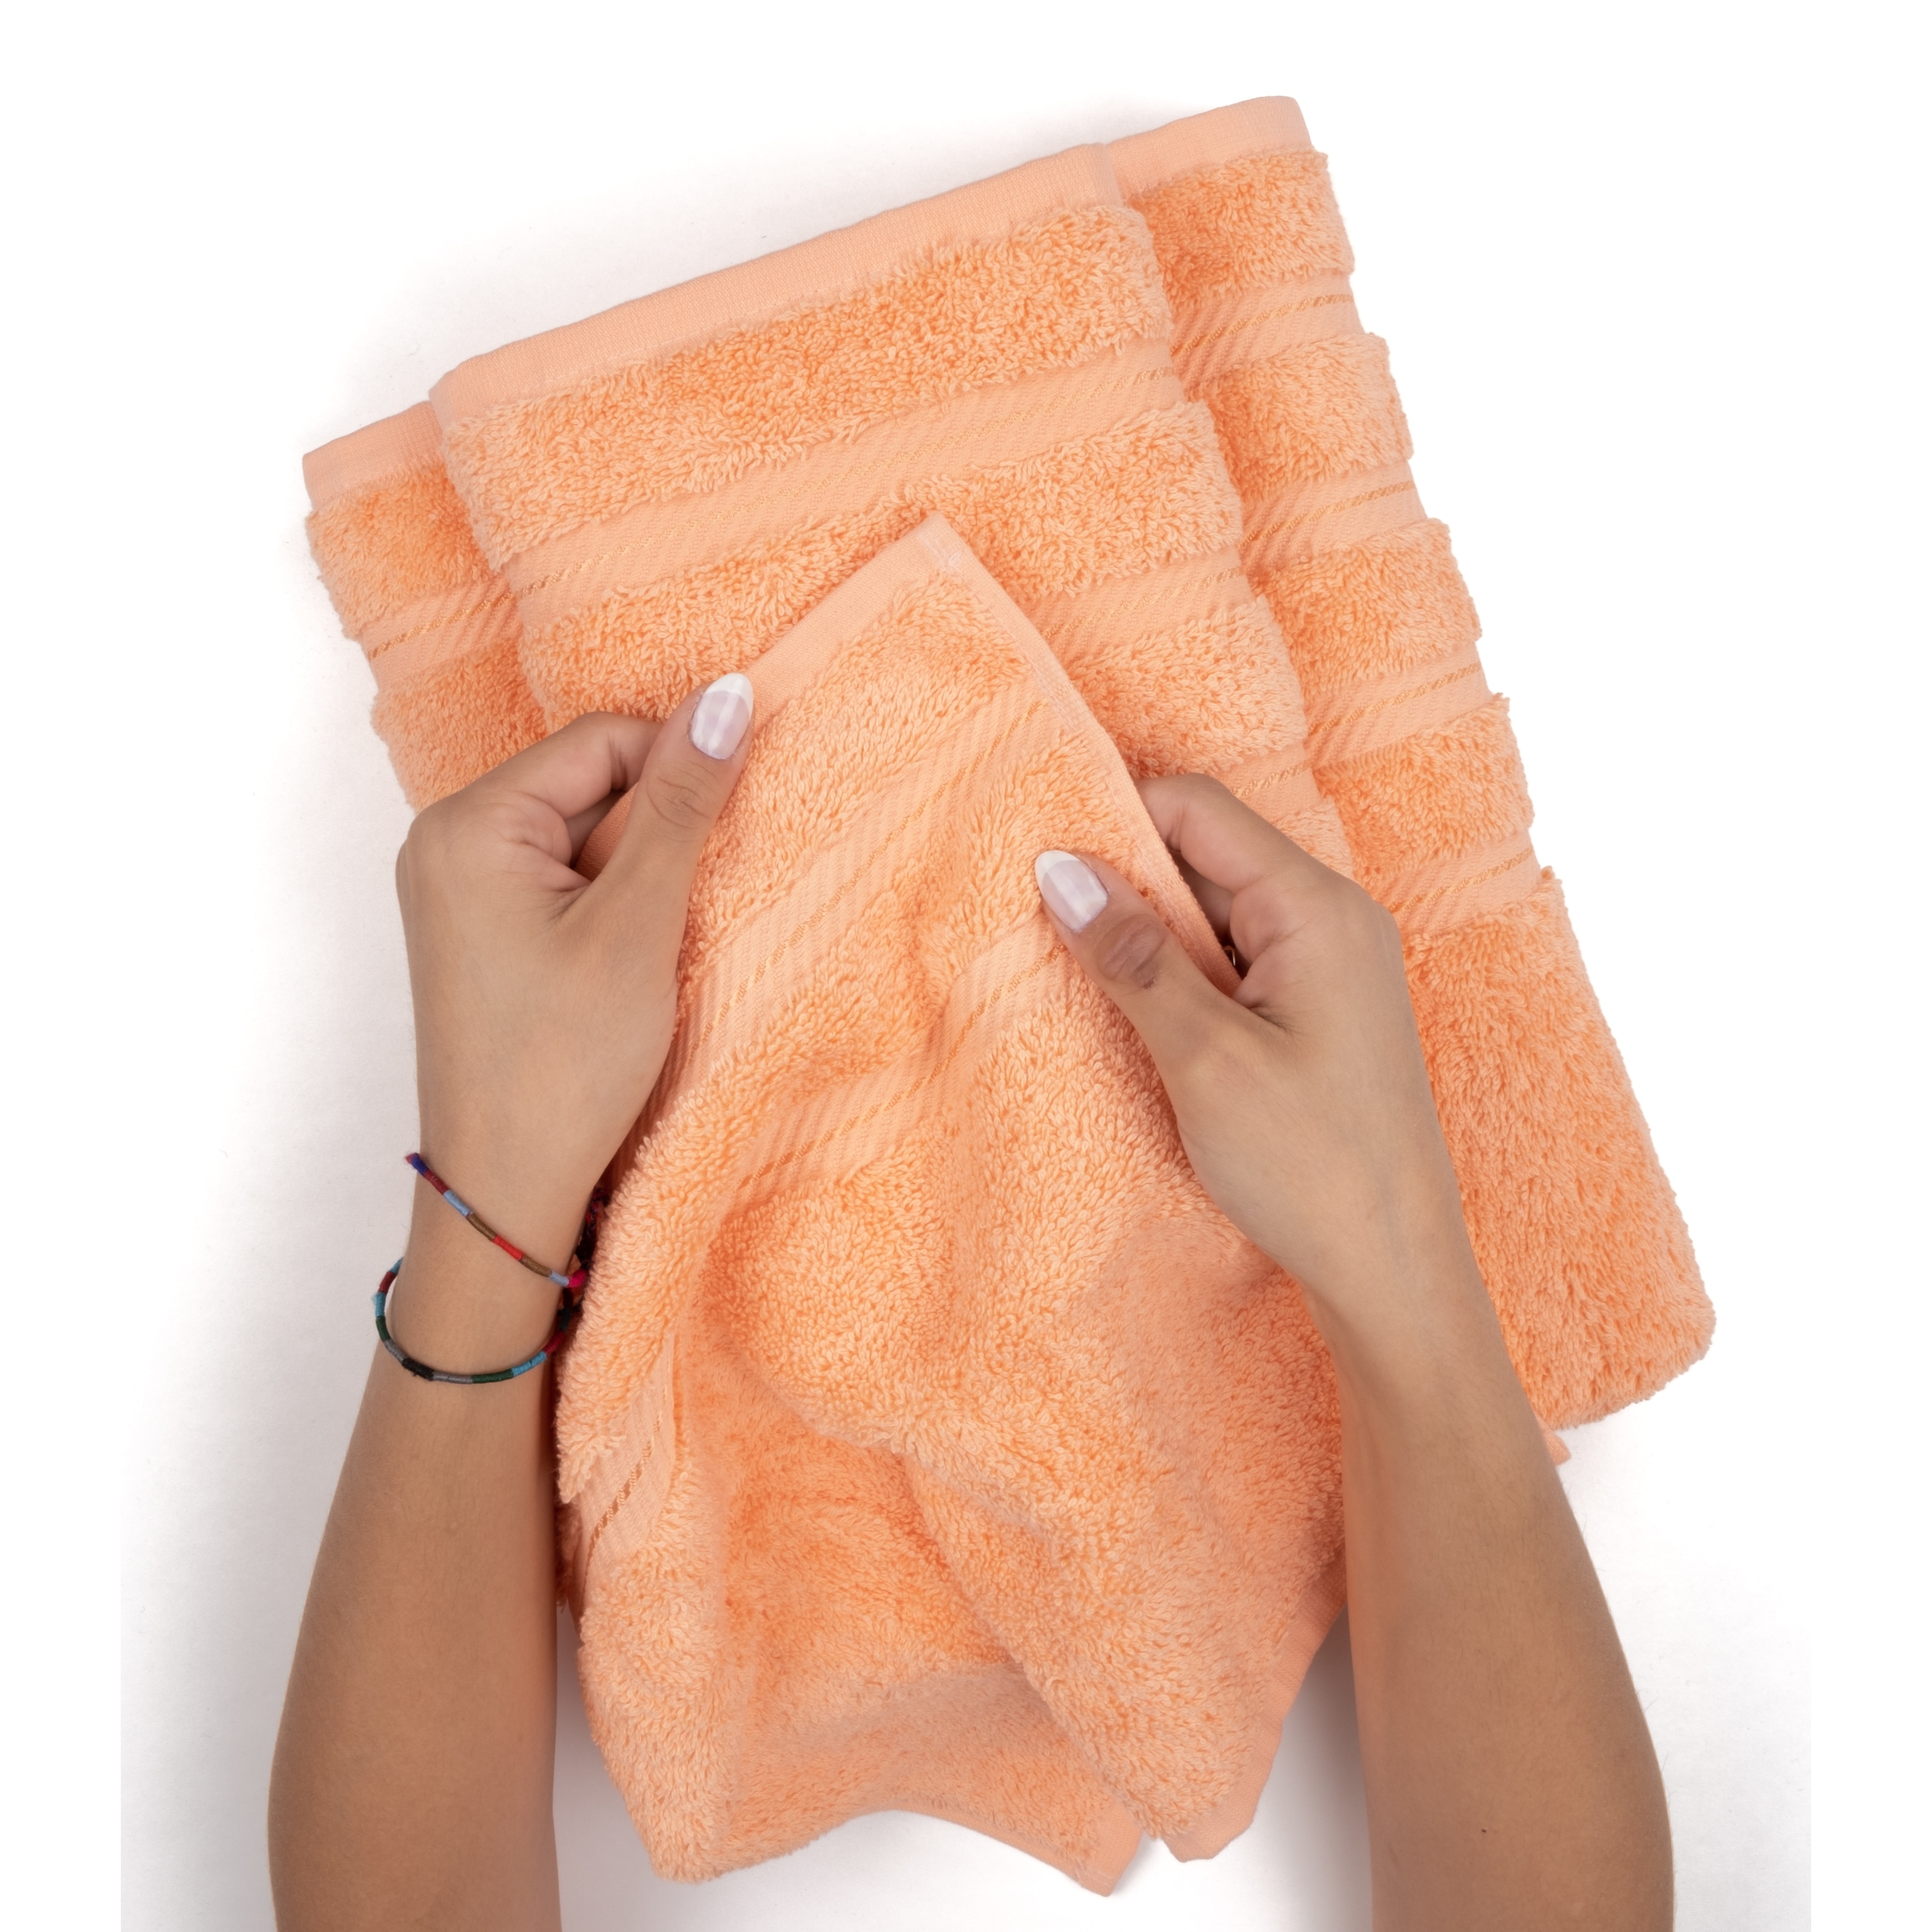 https://ak1.ostkcdn.com/images/products/is/images/direct/b665aed05cd57fdff1047b6db8983b02d41ca6de/American-Soft-Linen-100%25-Genuine-Turkish-Cotton-Large-Jumbo-Bath-Towel-35x70-Premium-%26-Luxury-Towels.jpg